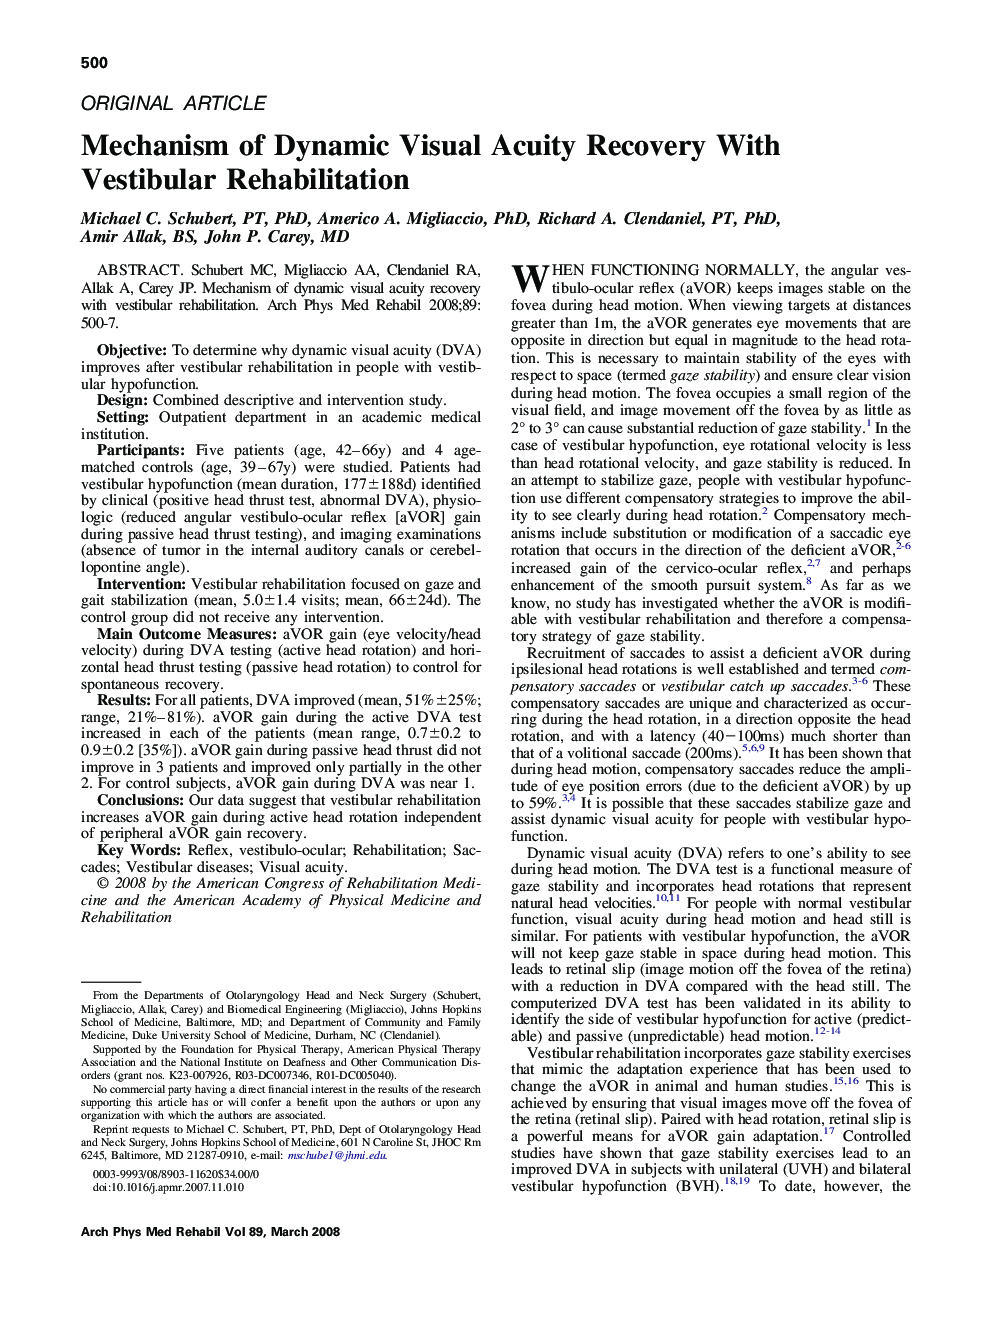 Mechanism of Dynamic Visual Acuity Recovery With Vestibular Rehabilitation 